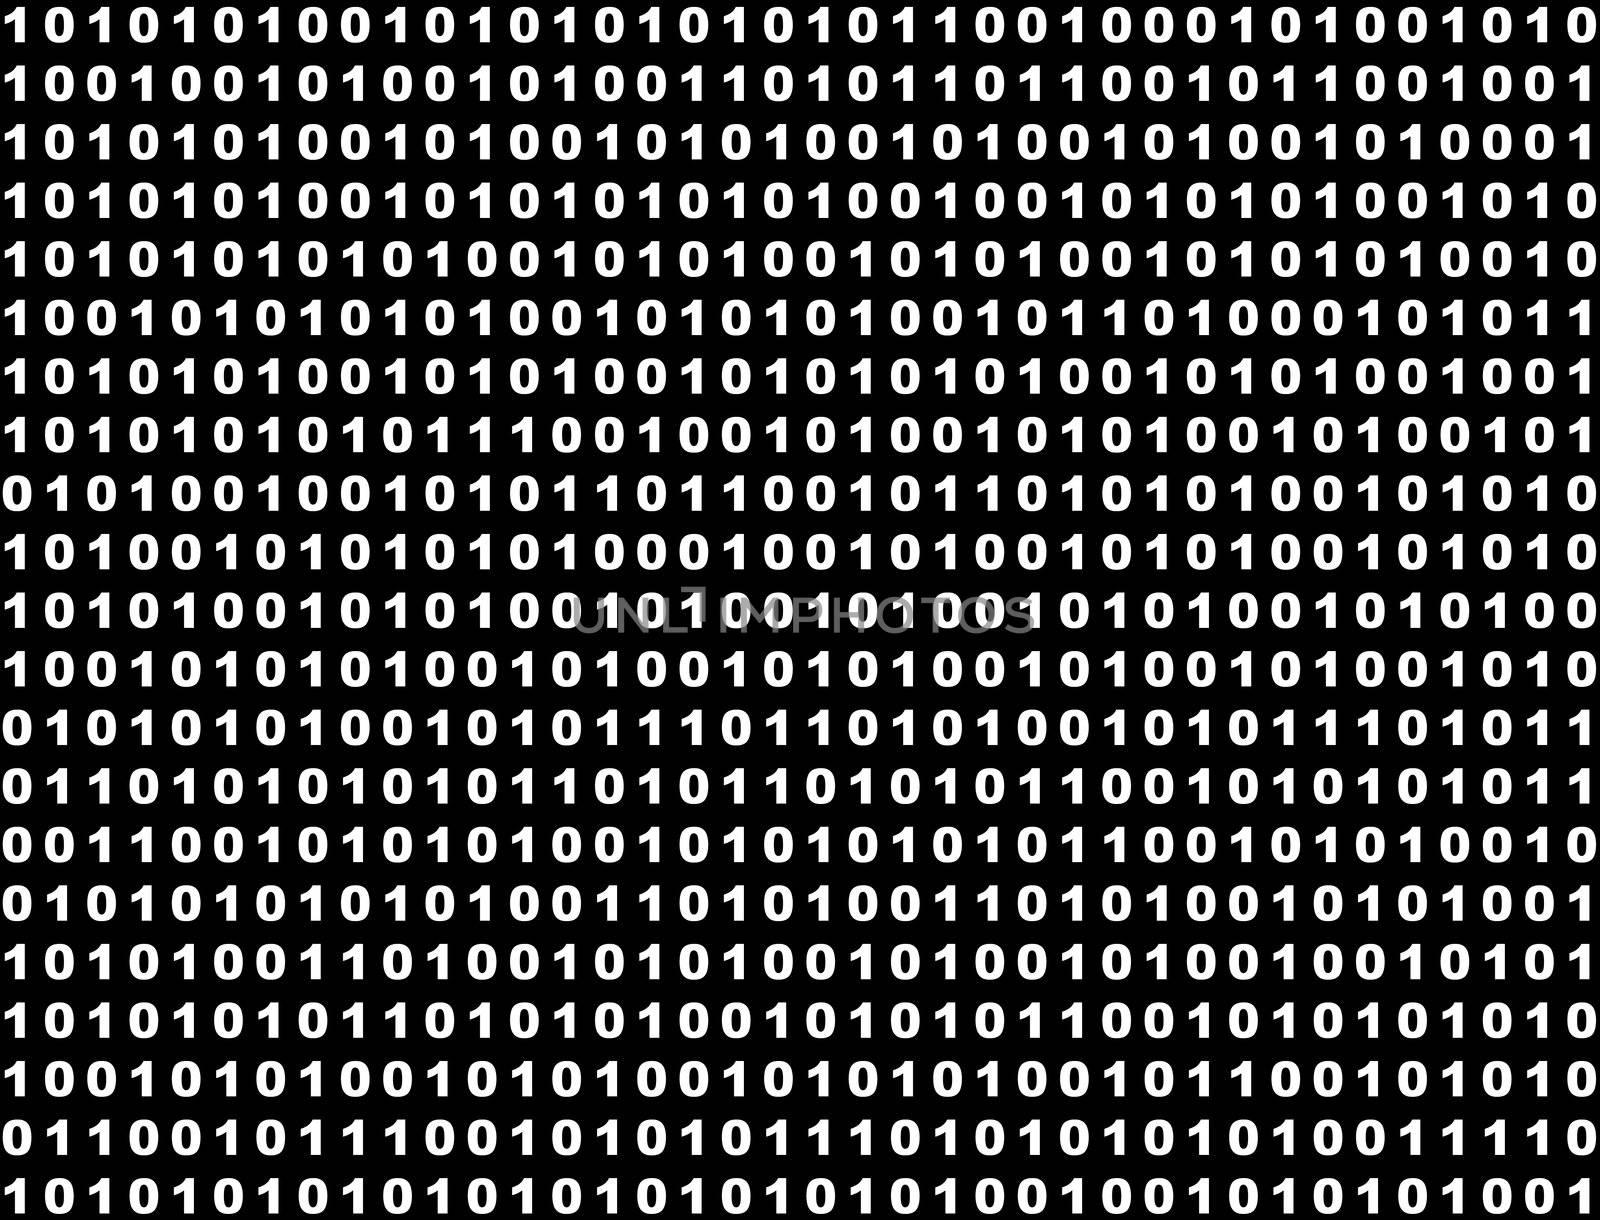 binary code by chrisroll